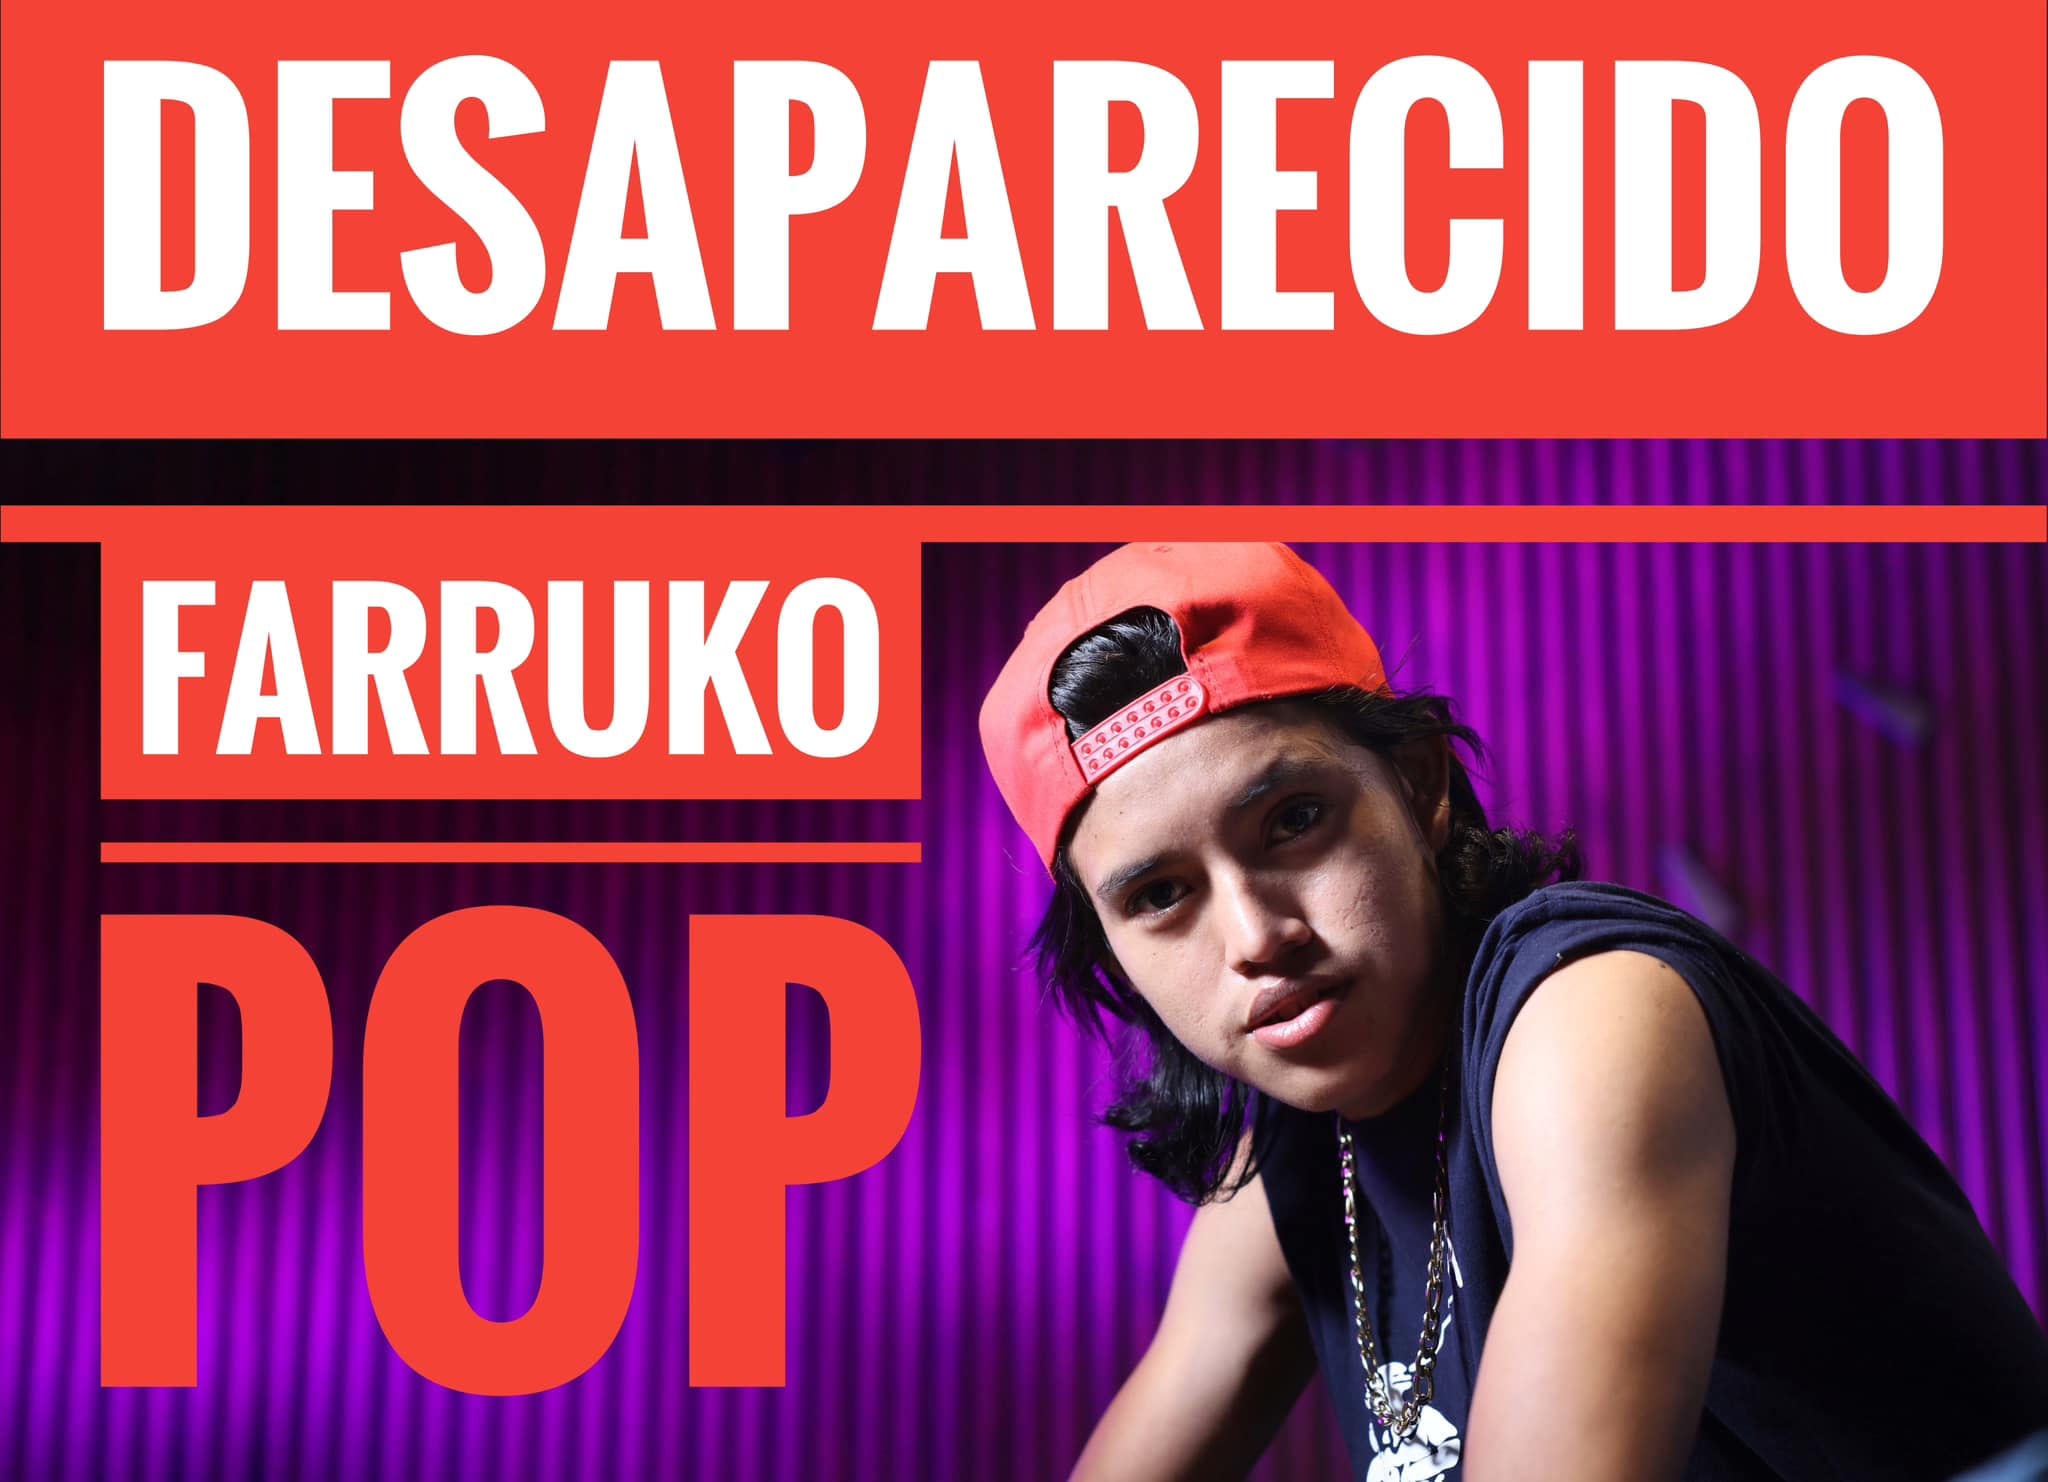 Farruko Pop es reportado como desaparecido.